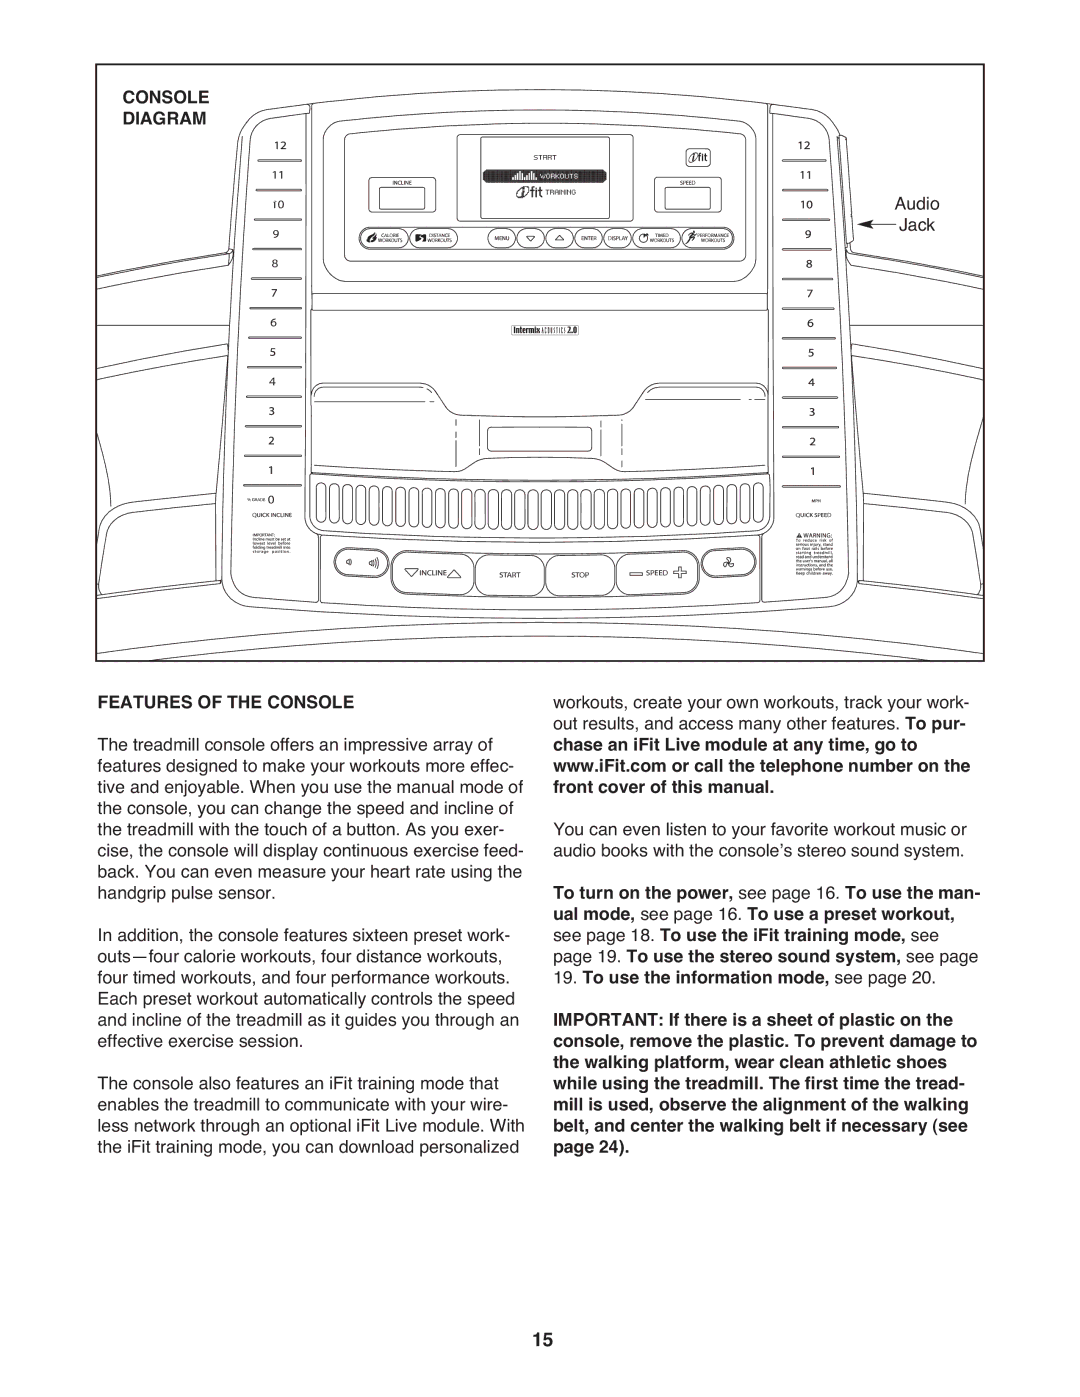 ProForm PFTL15610.0 warranty Diagram, Audio, Jack, Features of the Console 